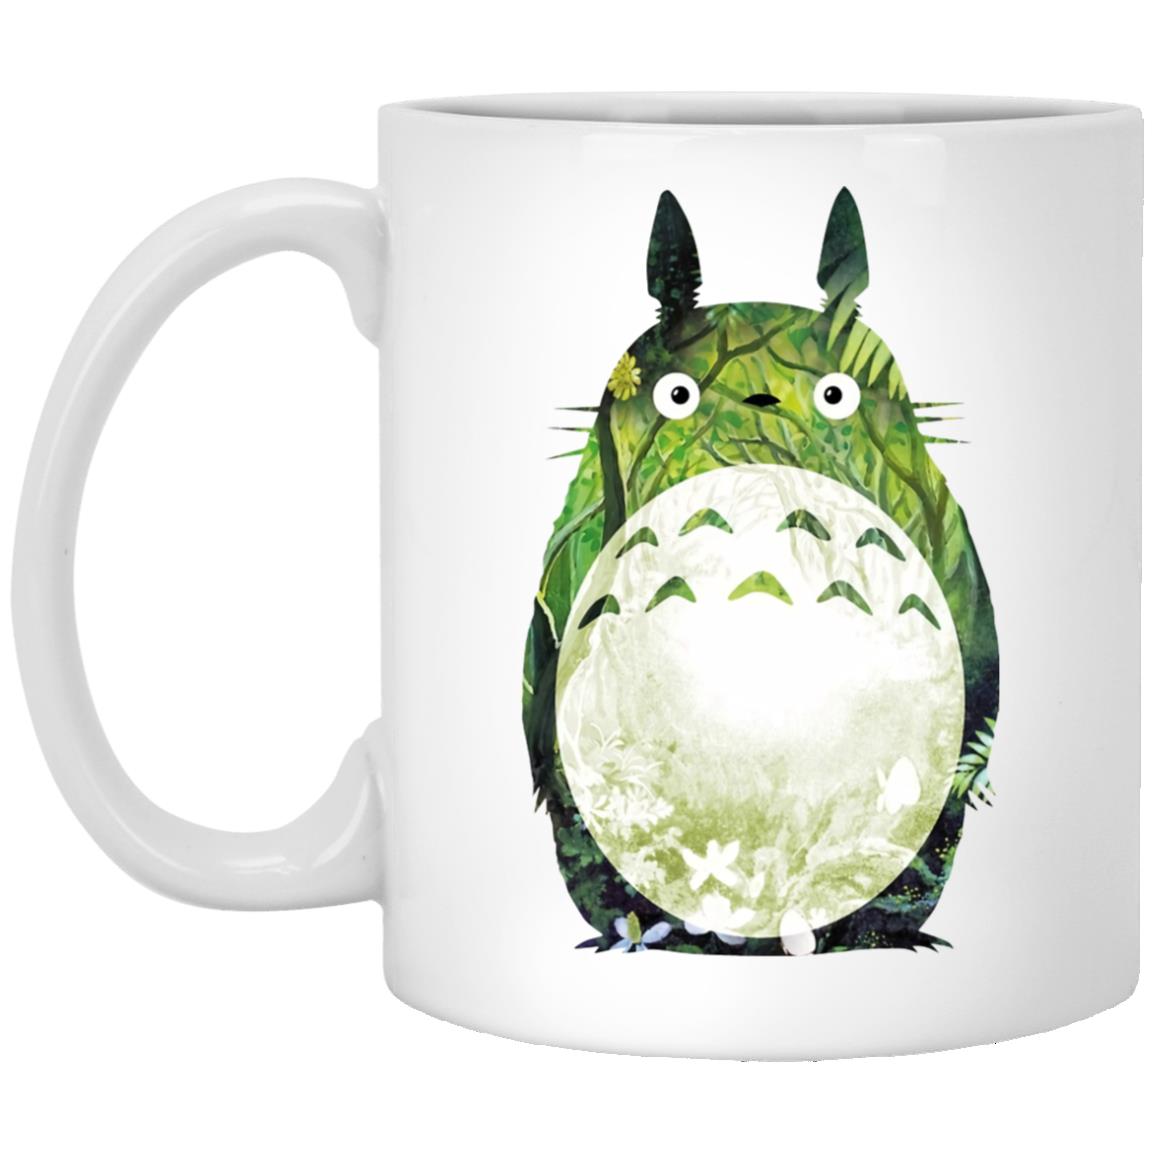 The Green Totoro Mug